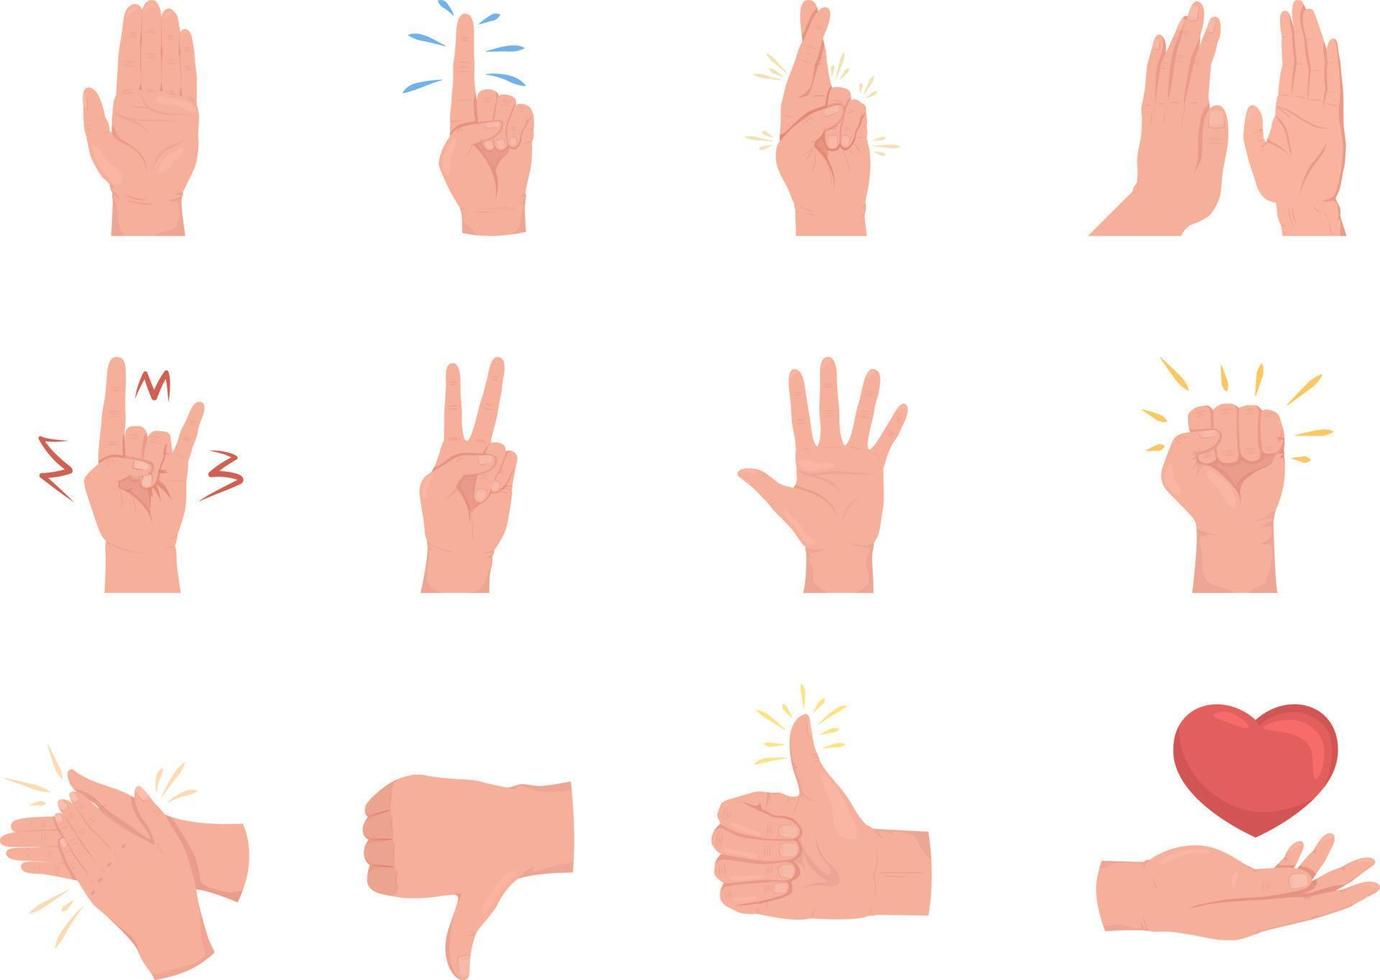 Non verbal communication semi flat color vector hand gesture set